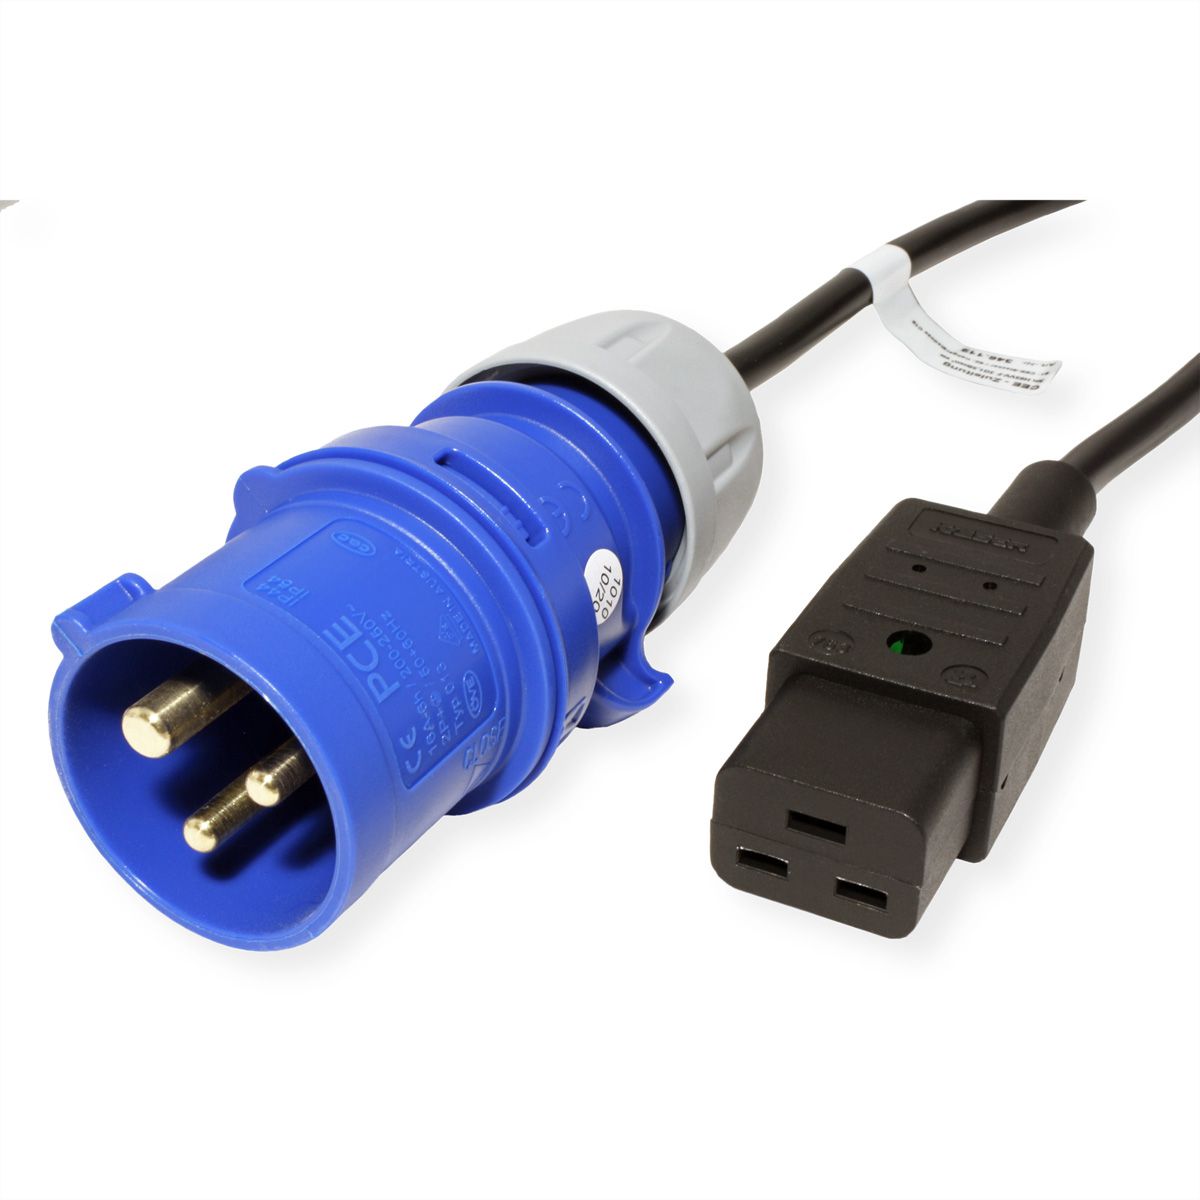 BACHMANN Kabel Stecker IEC60309-Blau - Kupplung C19, 3m 16A, schwarz, 3 m -  SECOMP Electronic Components GmbH